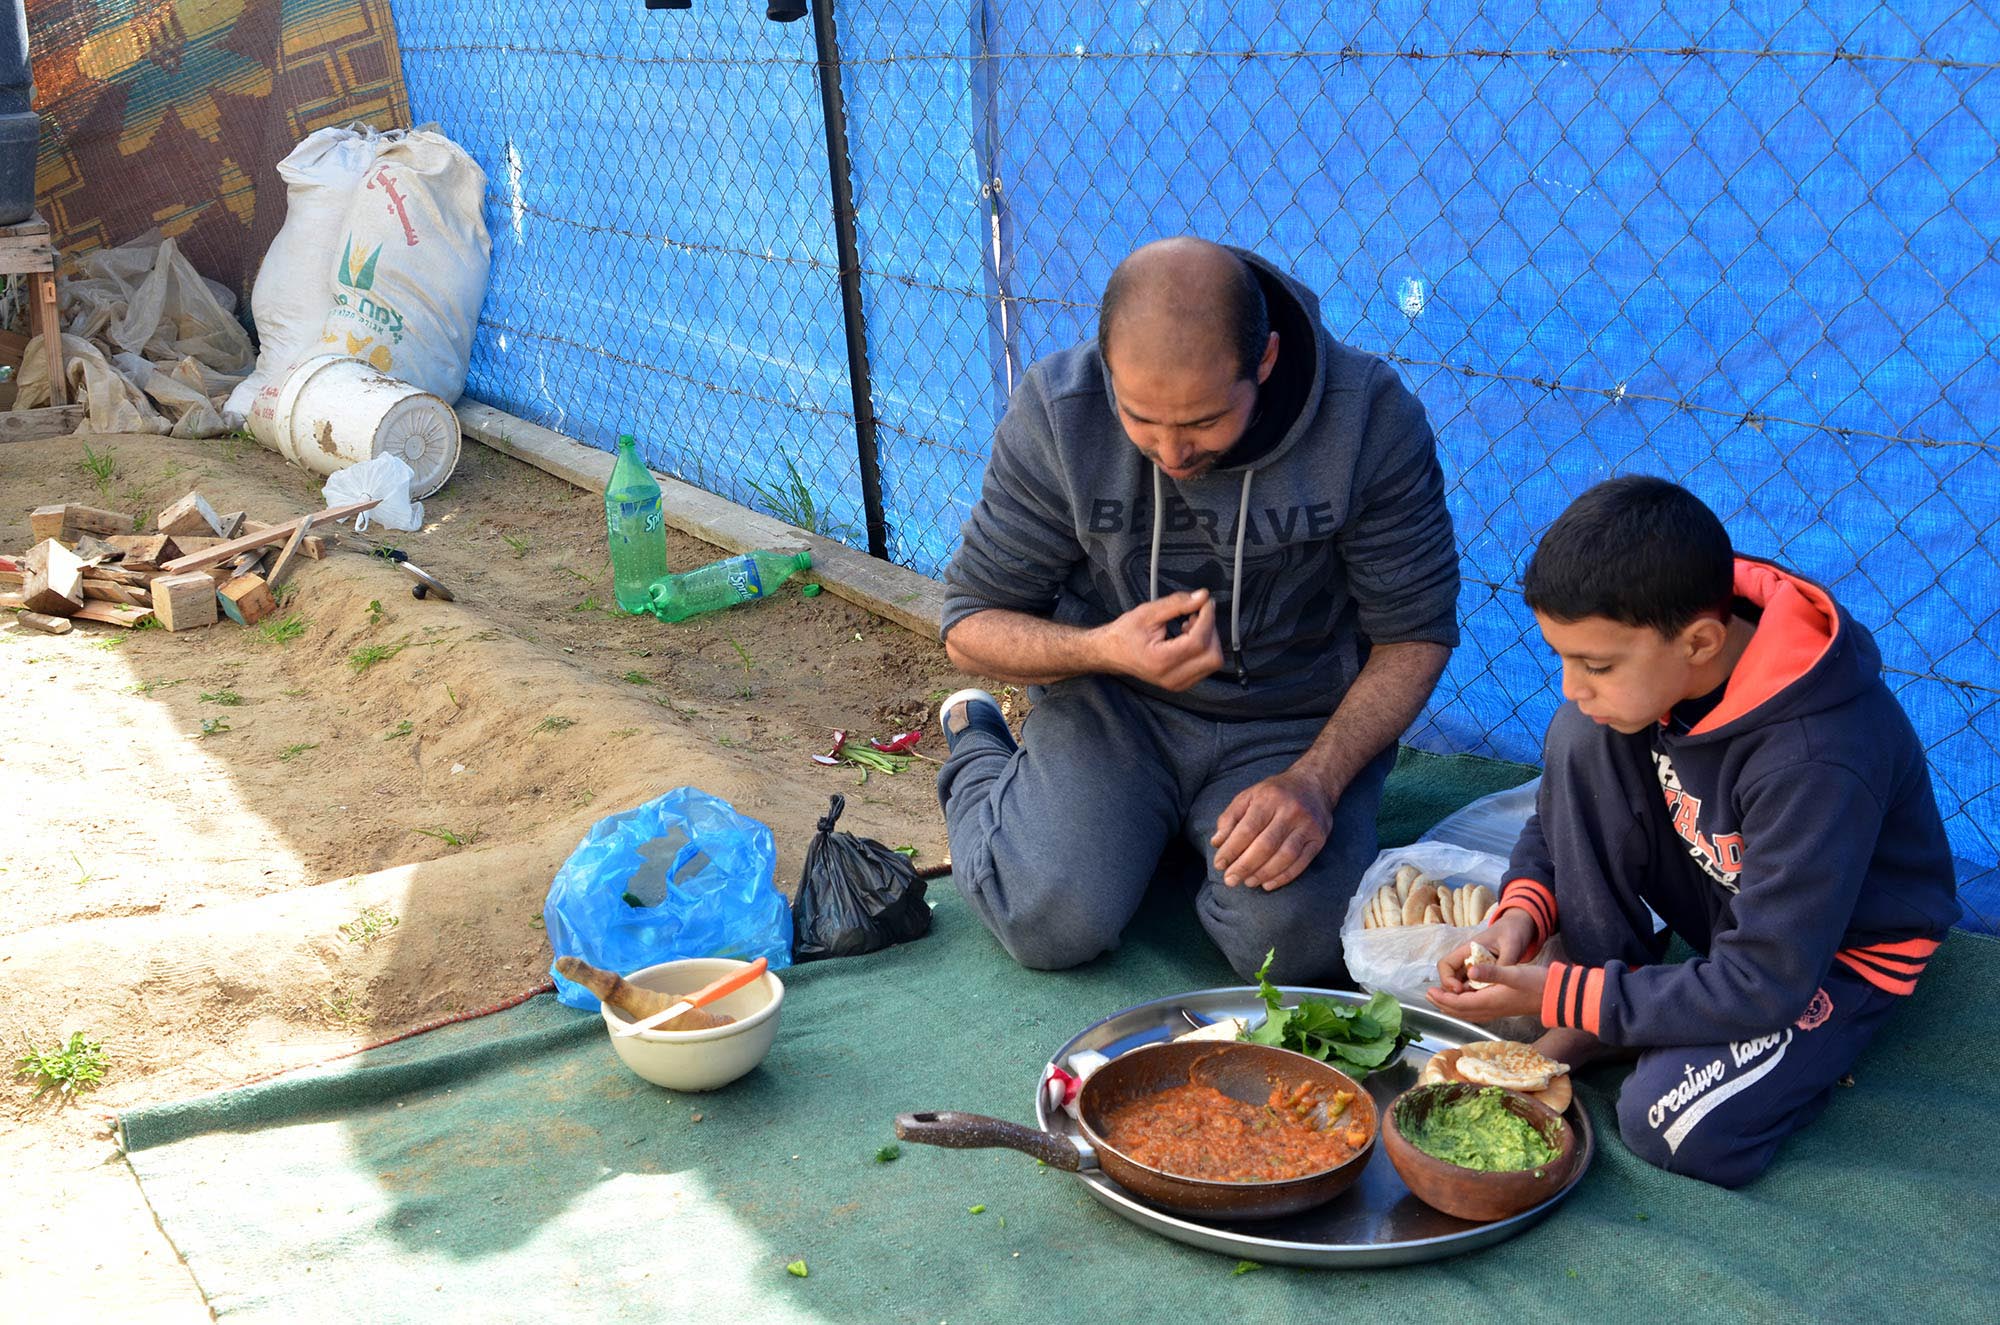 Mohamed and his son Moetasem enjoy their healthy meal.